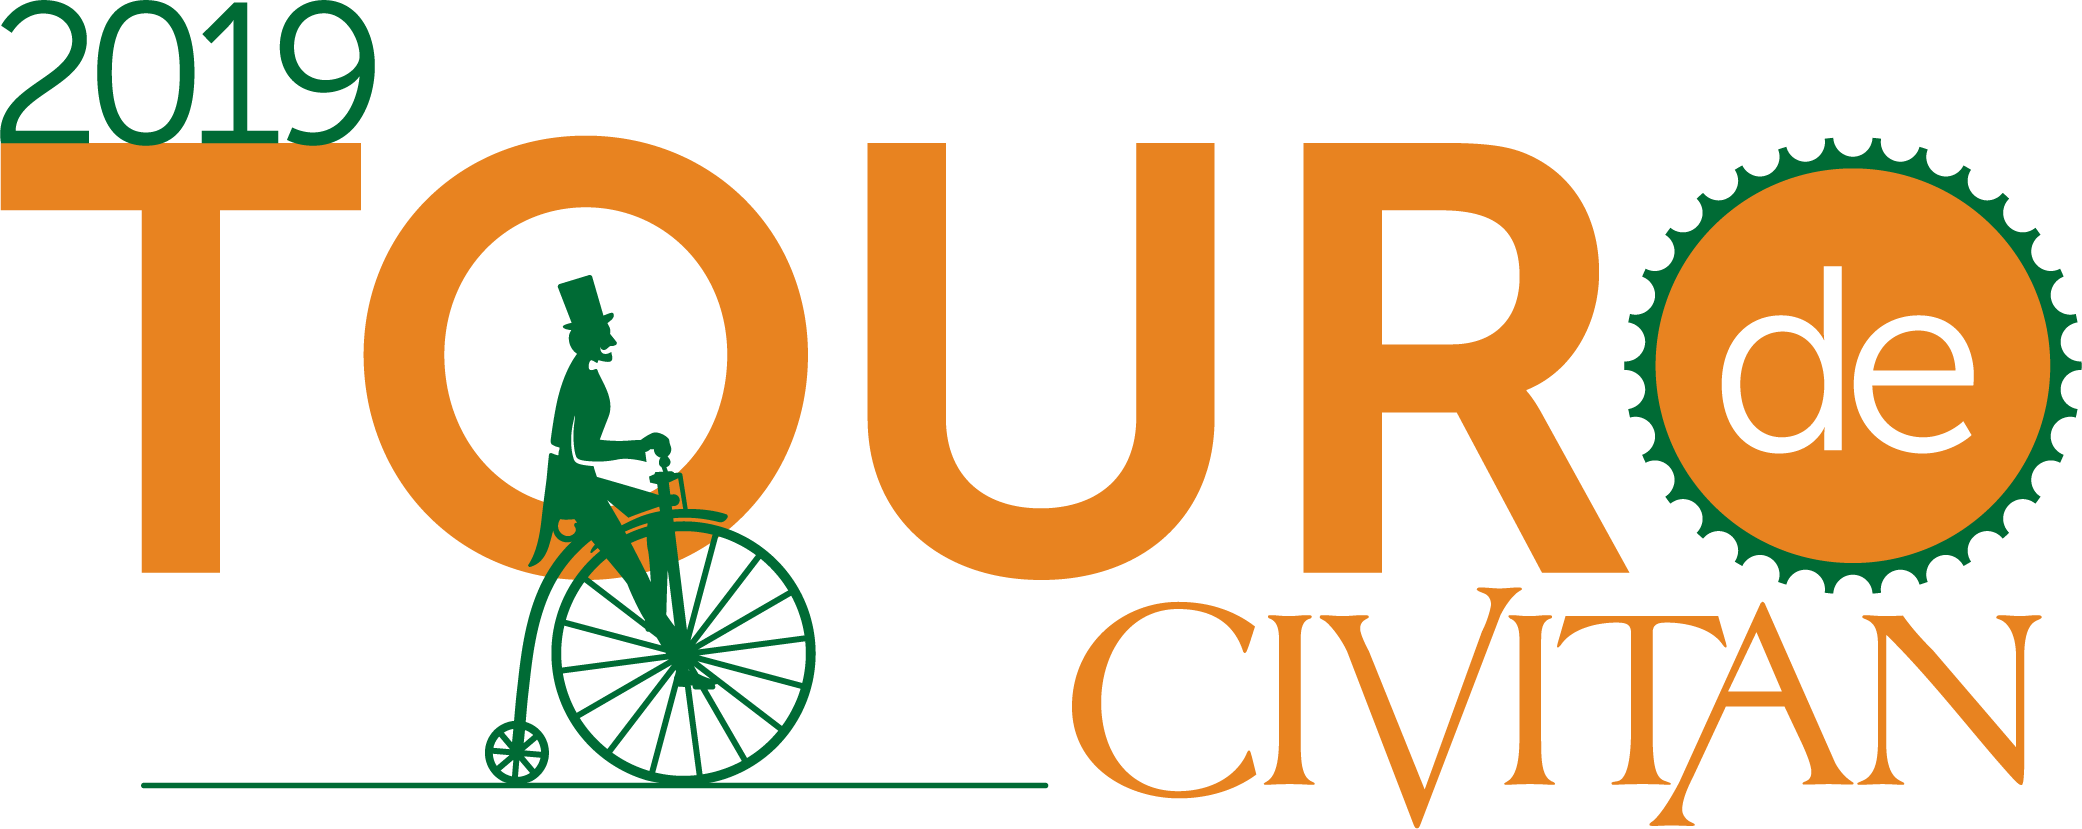 Civitan Logo - Tour de Civitan 2019